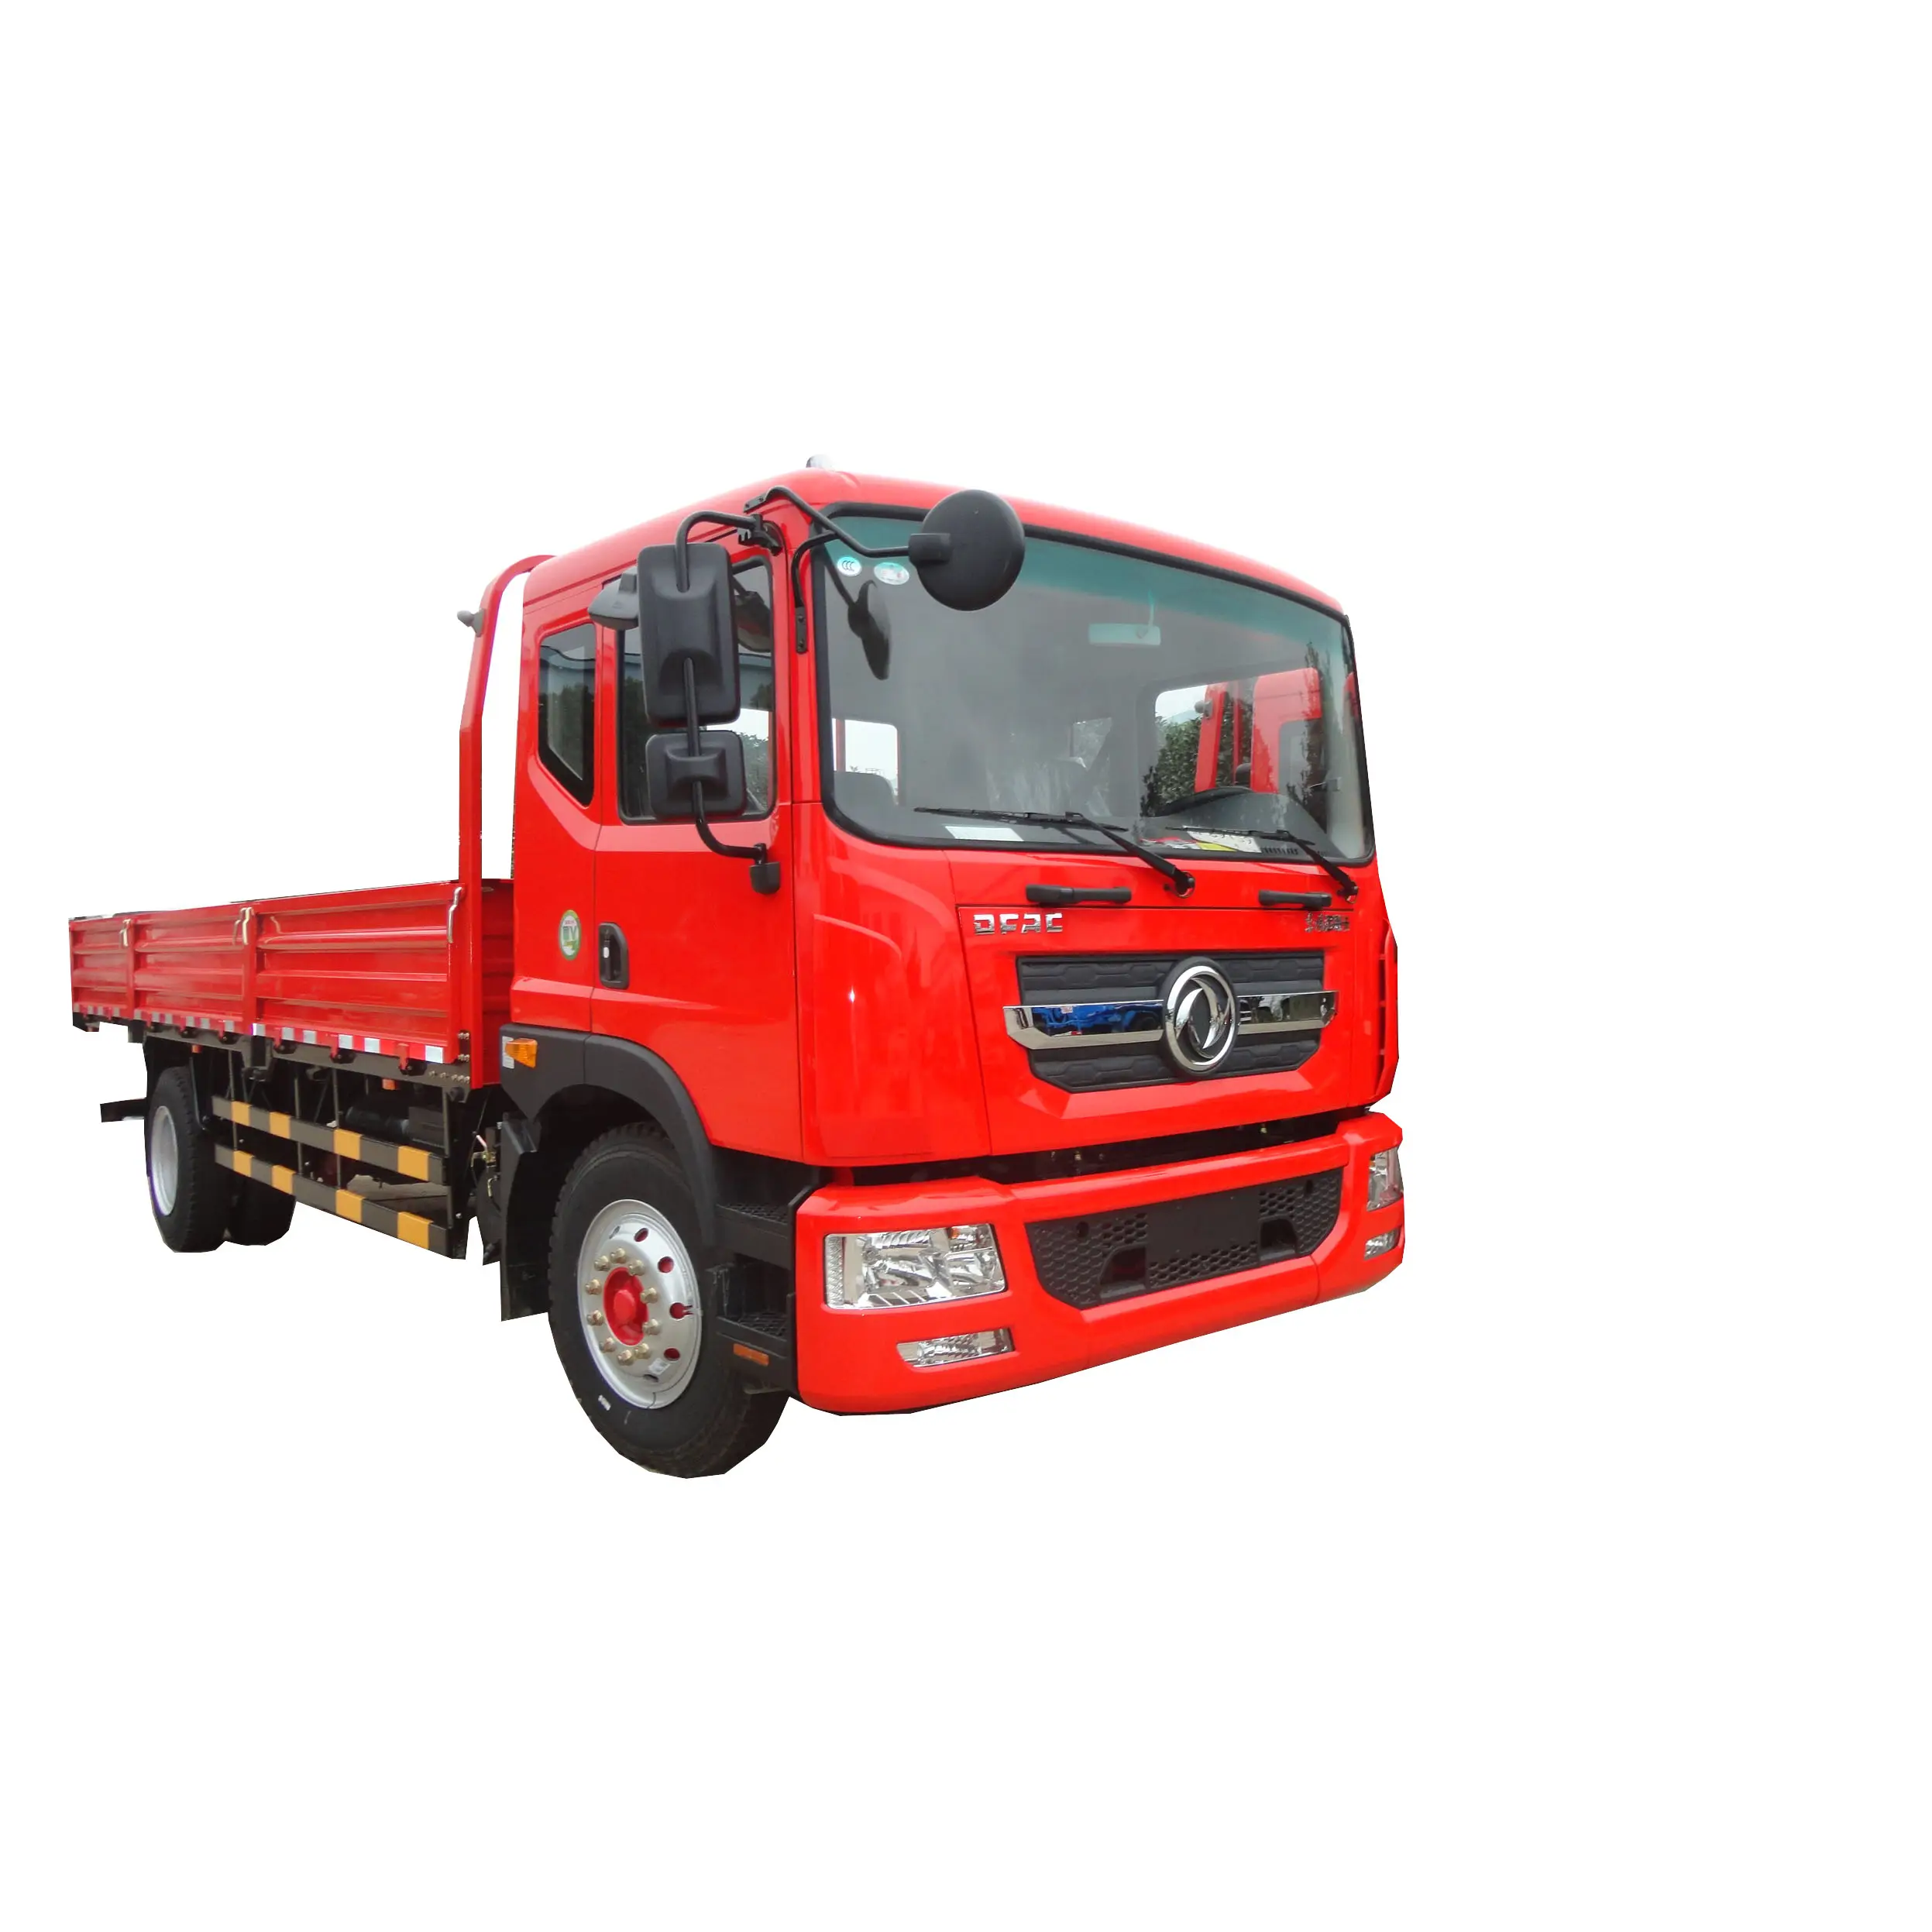 Грузовик dongfeng грузового автомобиля CLW грузоподъемностью 7 тонн